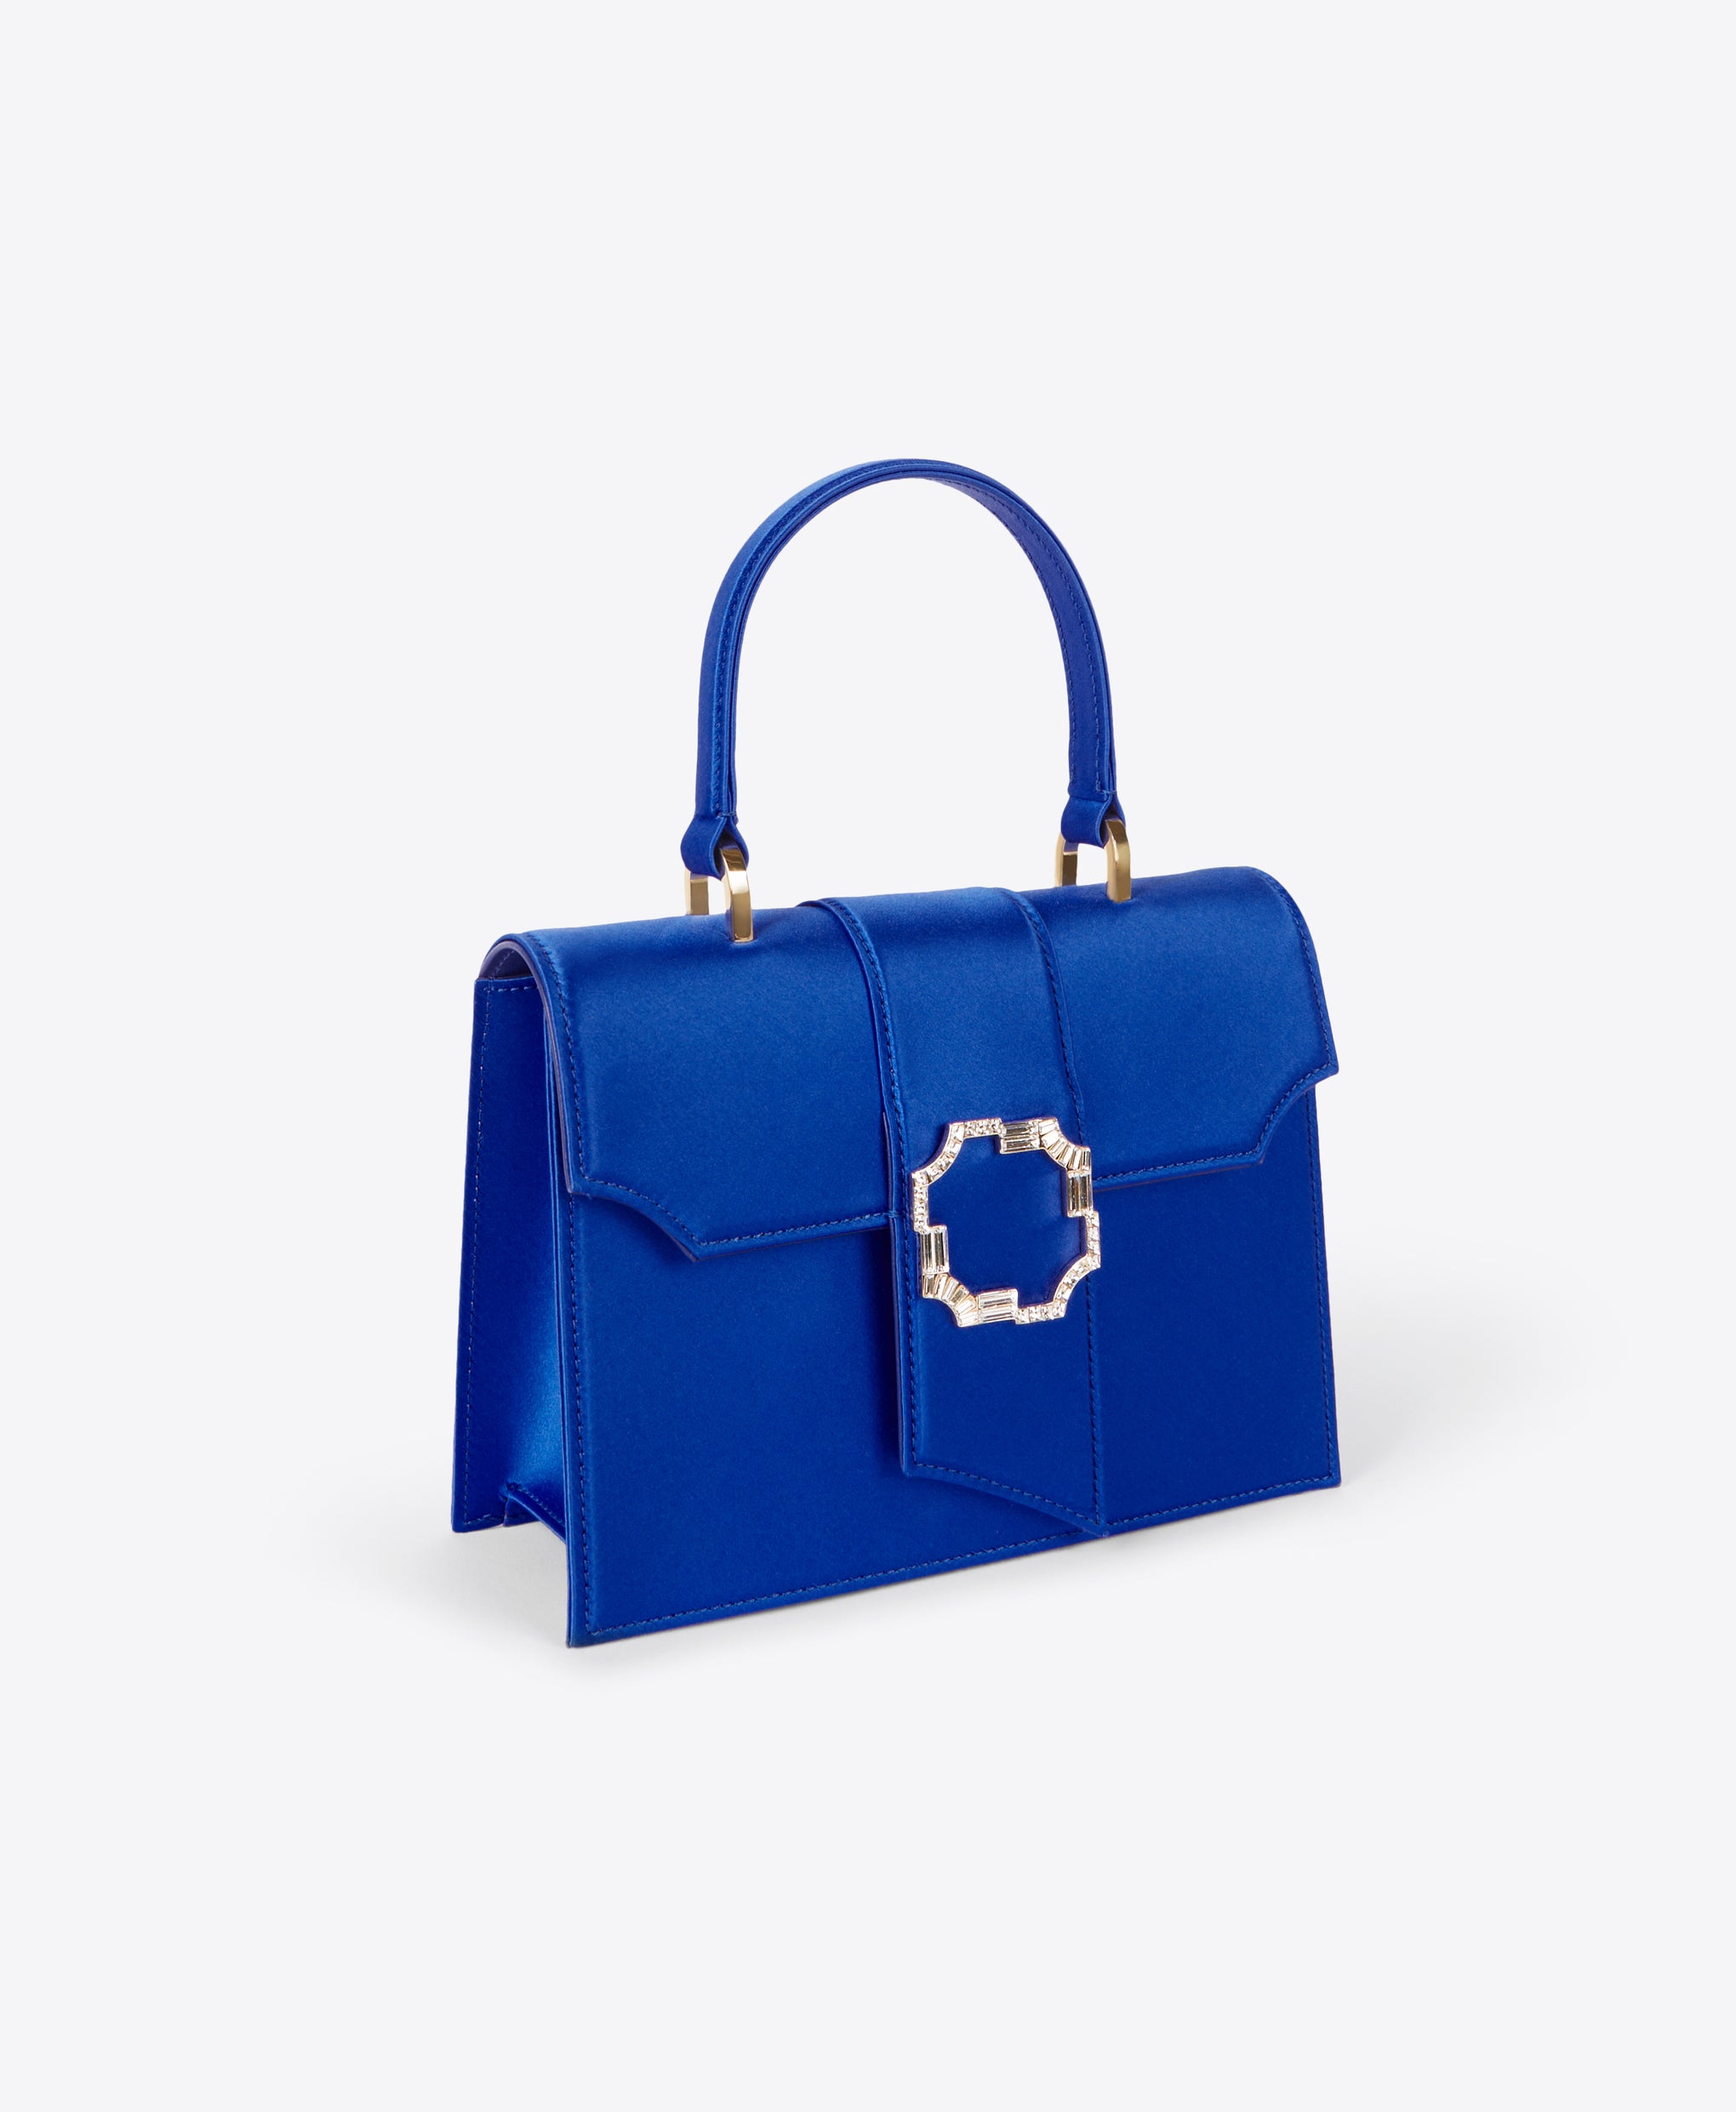 Women's Electric Blue Satin Square Handbag Malone Souliers